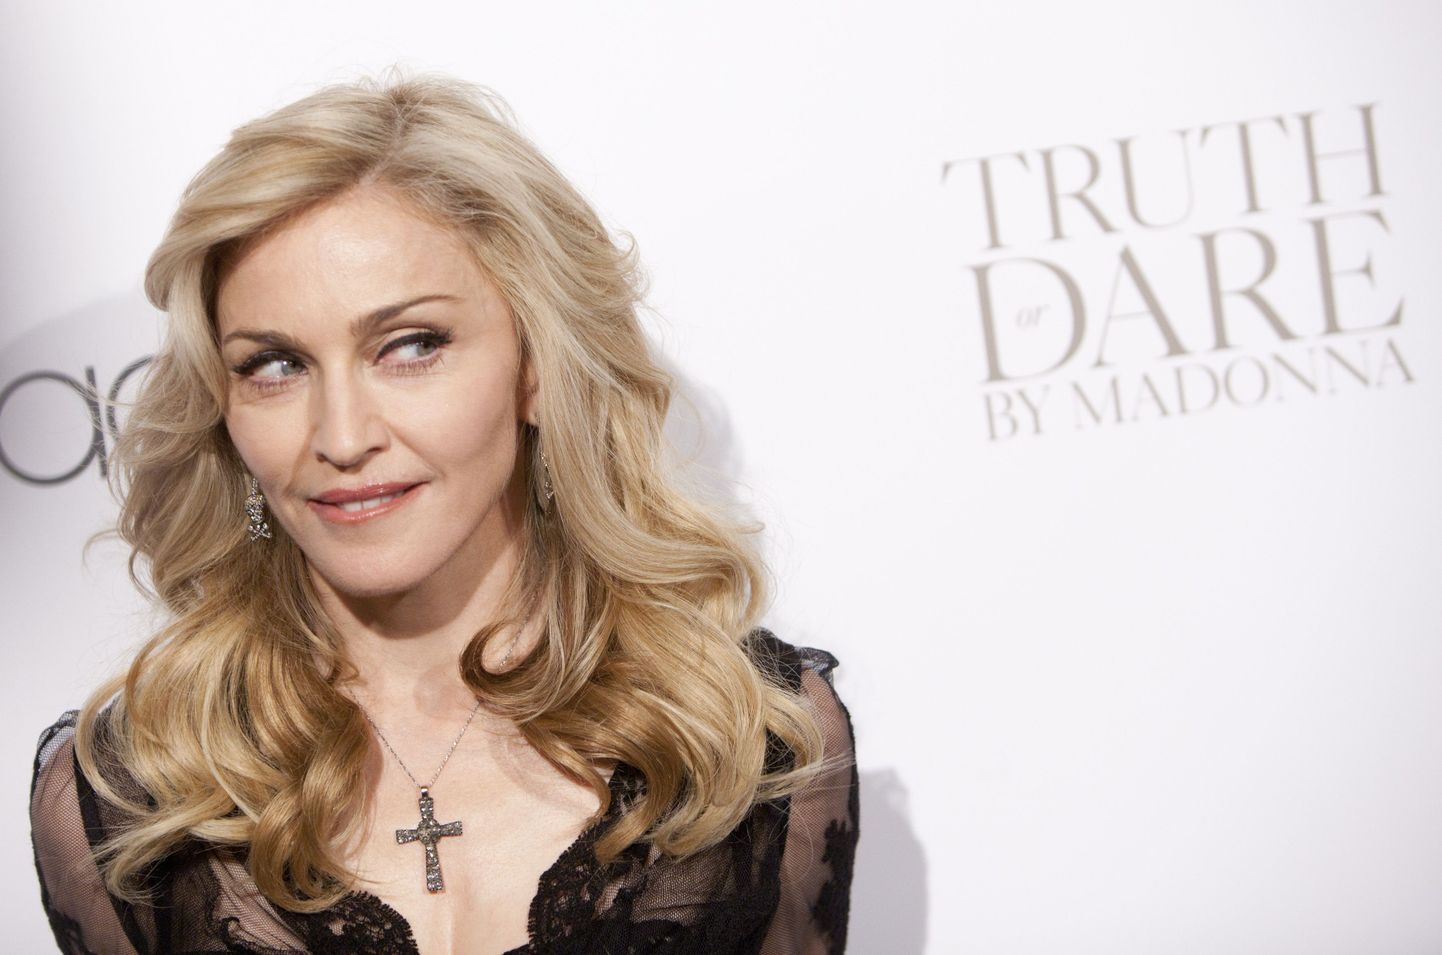 Мадонна на презентации своего нового парфюма "Truth or Dare by Madonna".